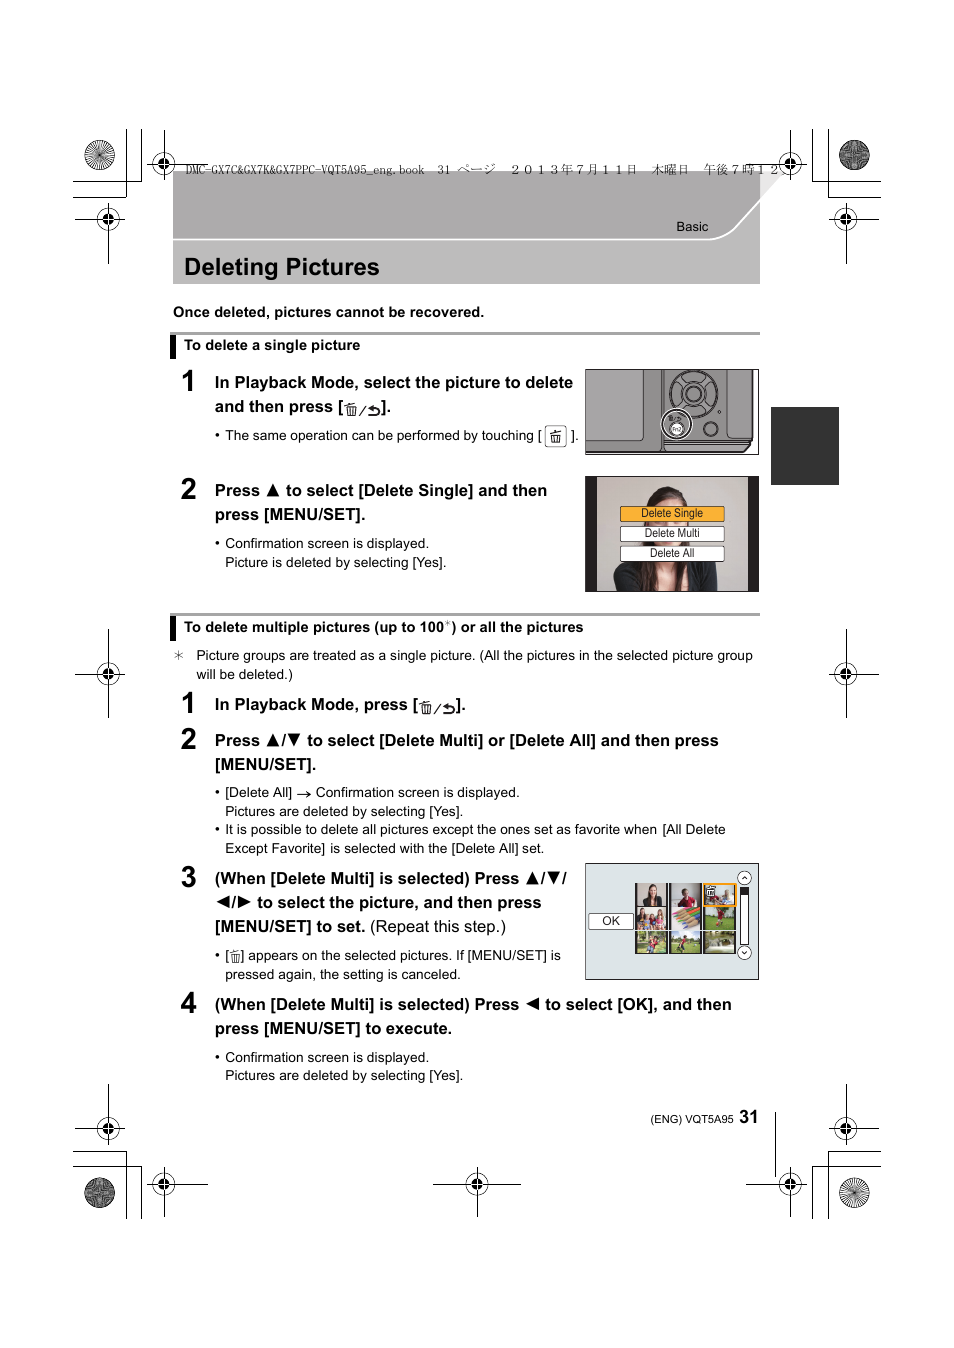 Deleting pictures | Panasonic DMC-GX7SBODY User Manual | Page 31 / 104